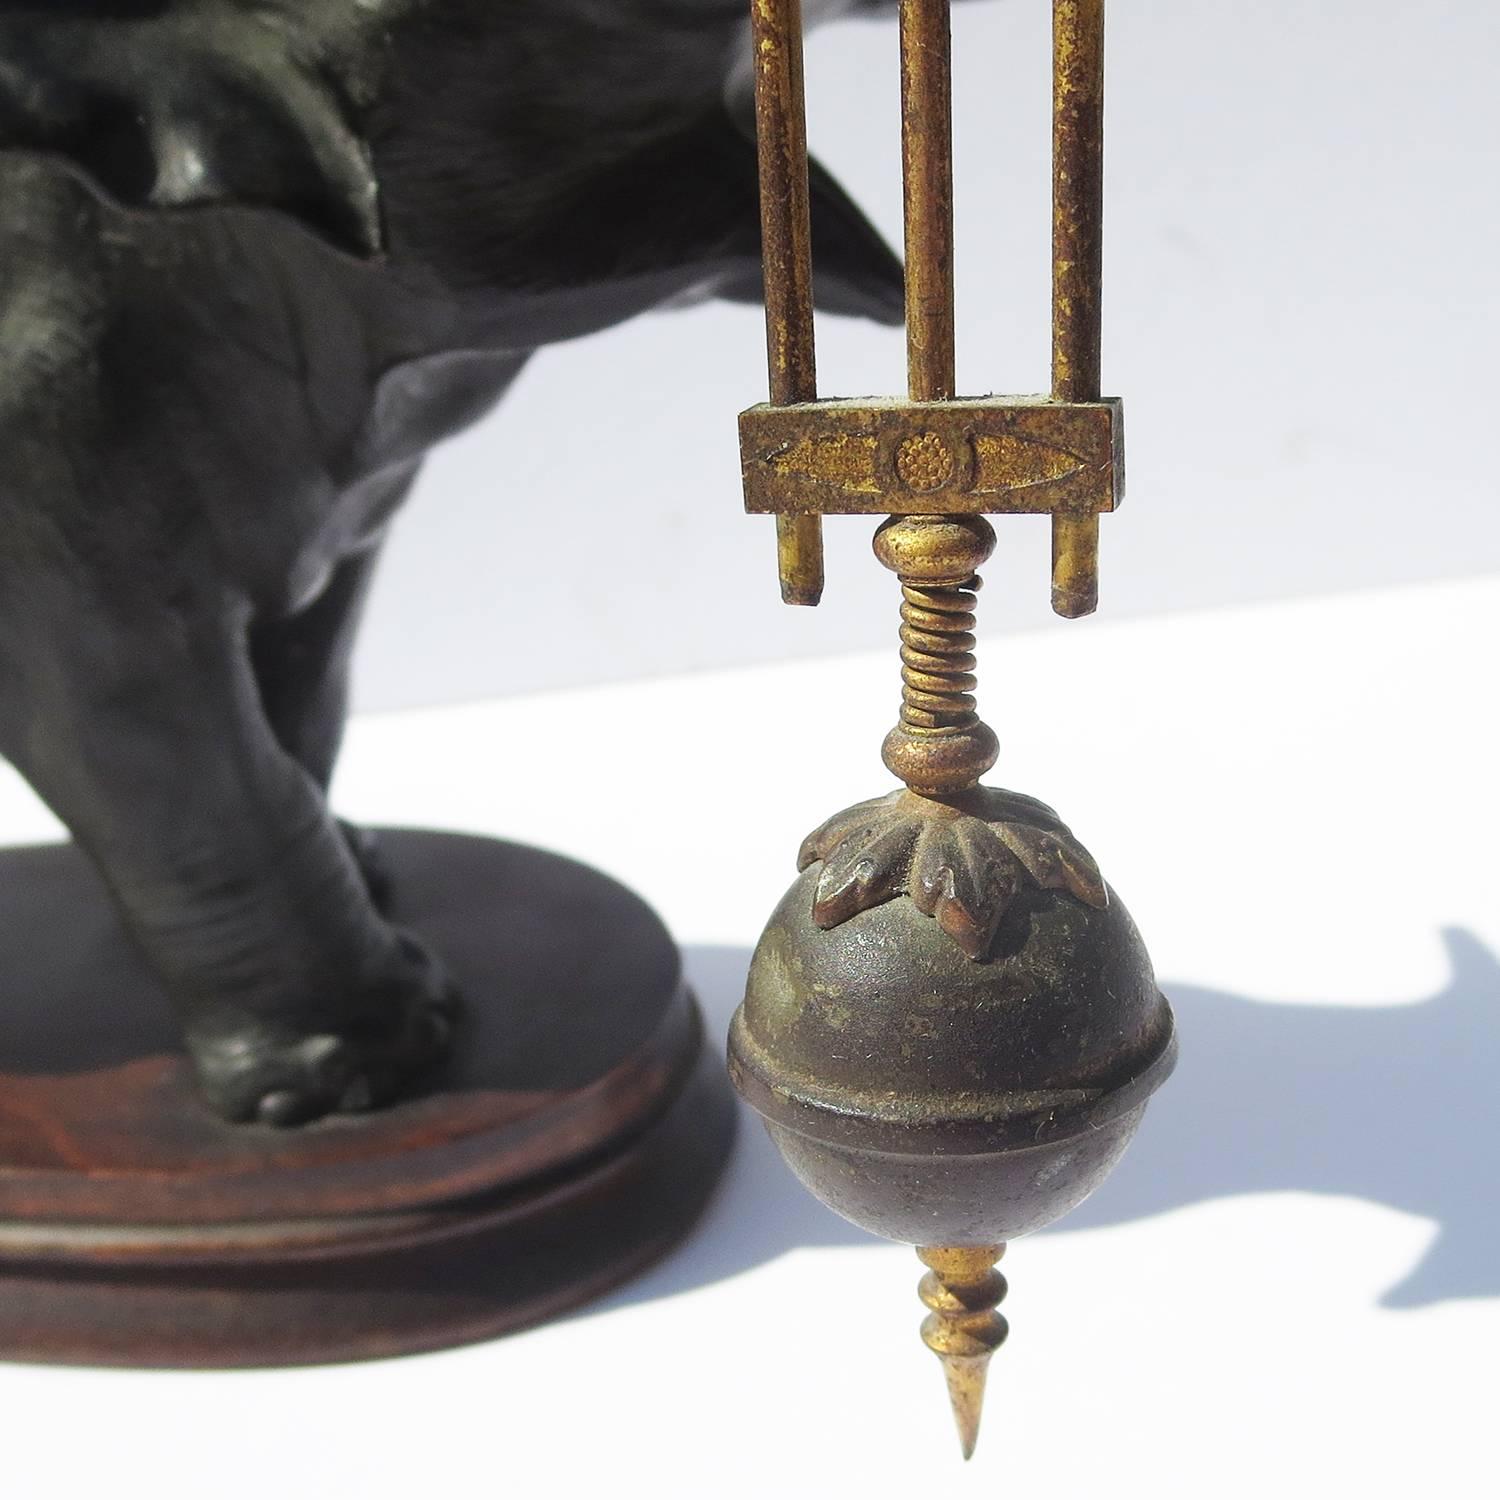 Victorian 19th Century French Bronze Elephant Clock with Pendulum Movement